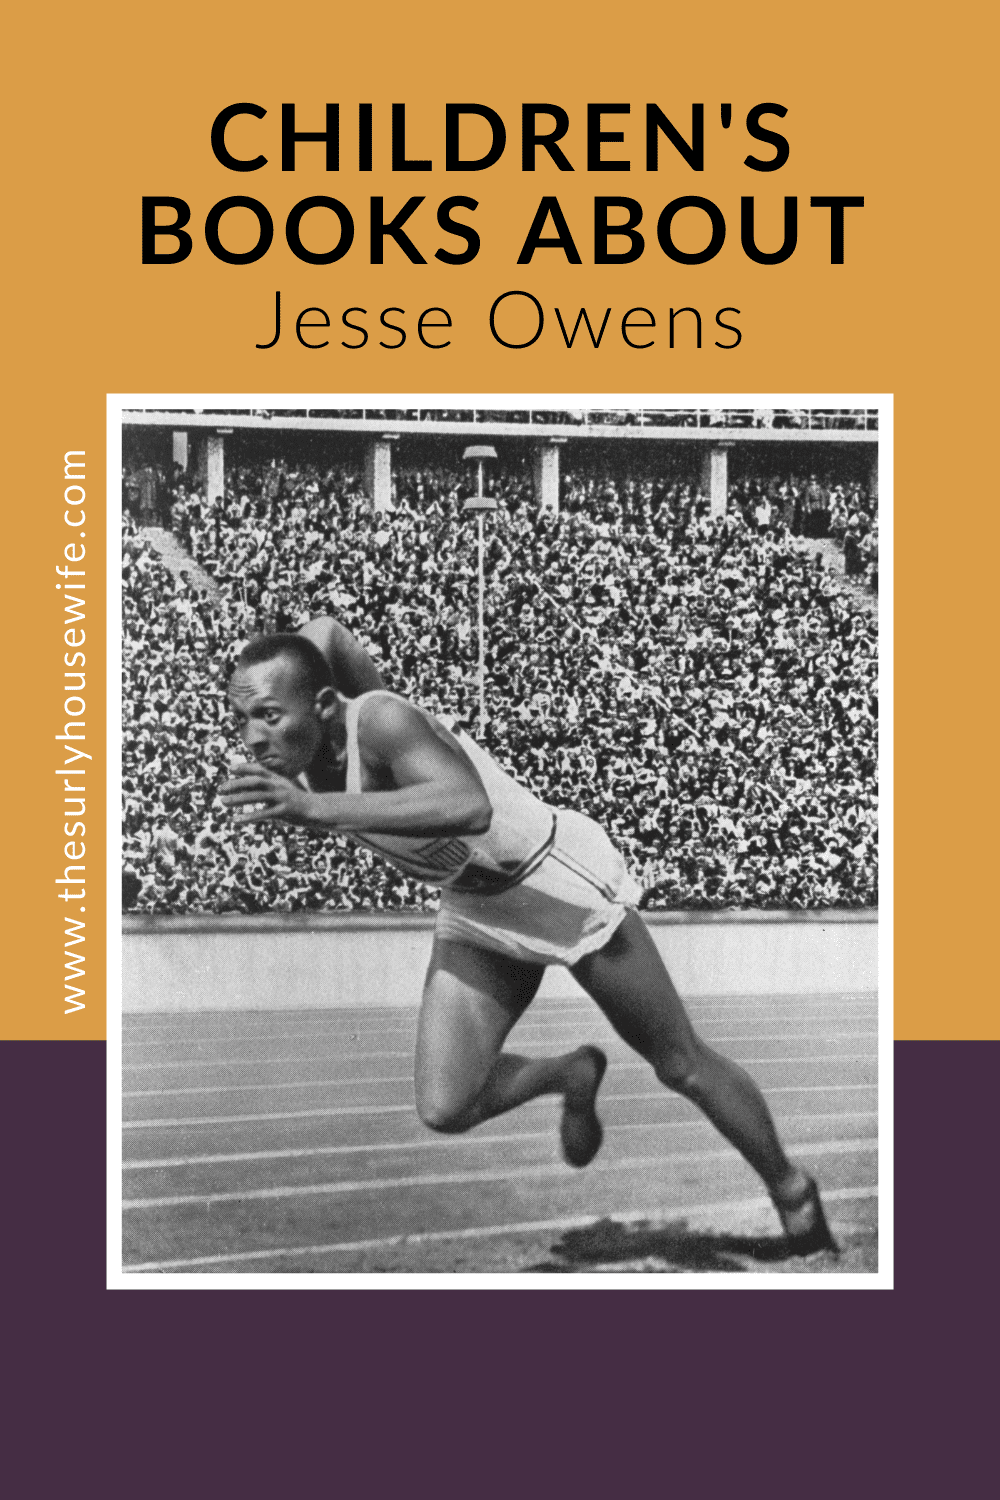 10 fabulous children's books about Jesse Owens